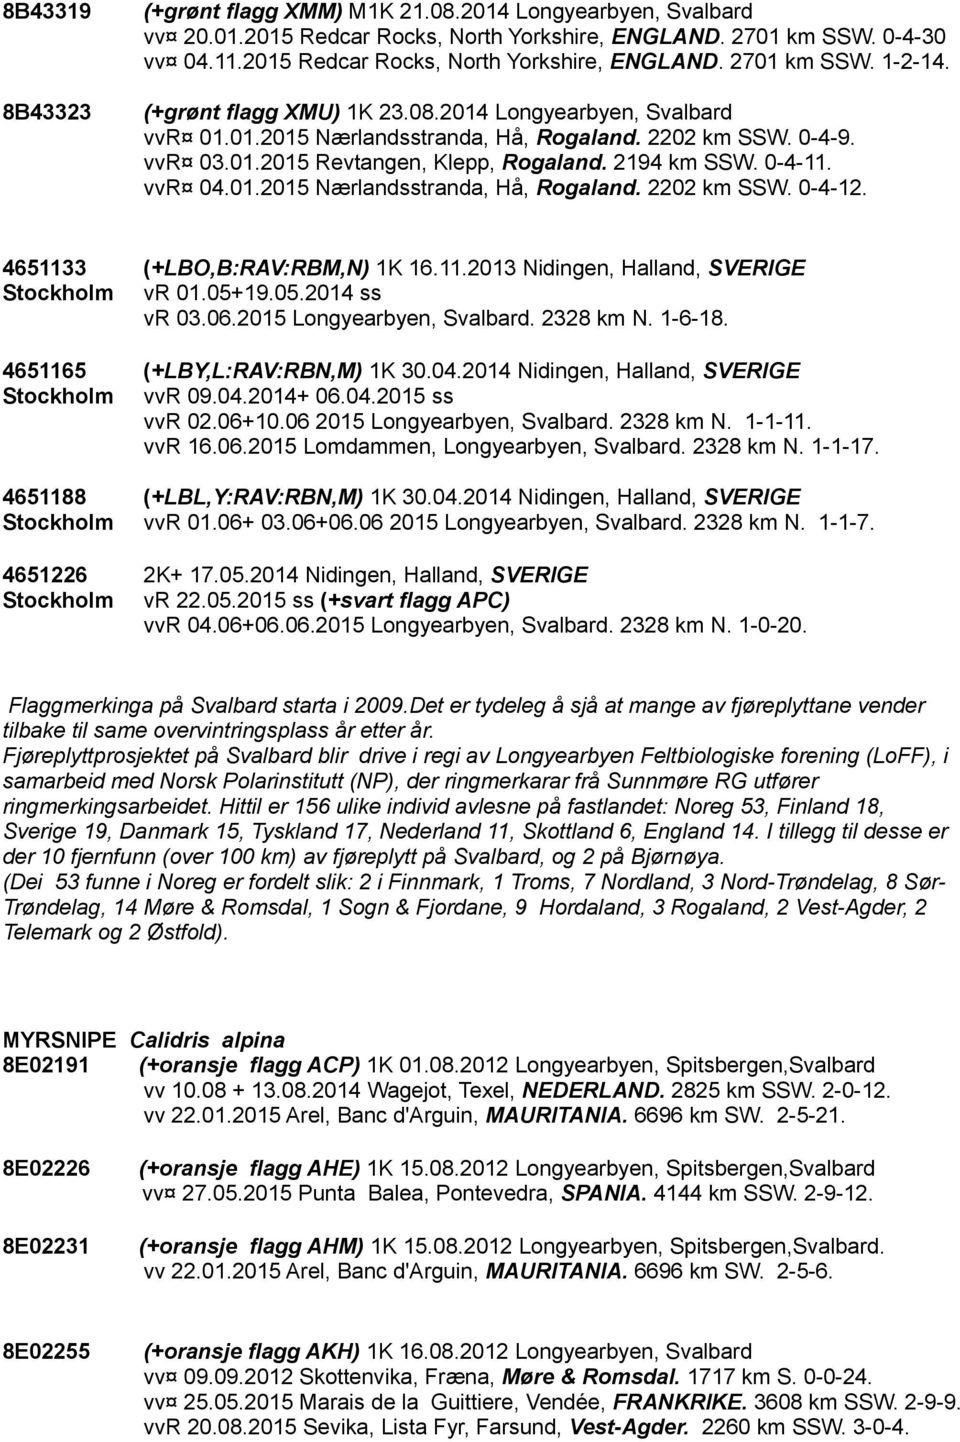 4651133 (+LBO,B:RAV:RBM,N) 1K 16.11.2013 Nidingen, Halland, SVERIGE Stockholm vr 01.05+19.05.2014 ss vr 03.06.2015 Longyearbyen, Svalbard. 2328 km N. 1-6-18. 4651165 (+LBY,L:RAV:RBN,M) 1K 30.04.